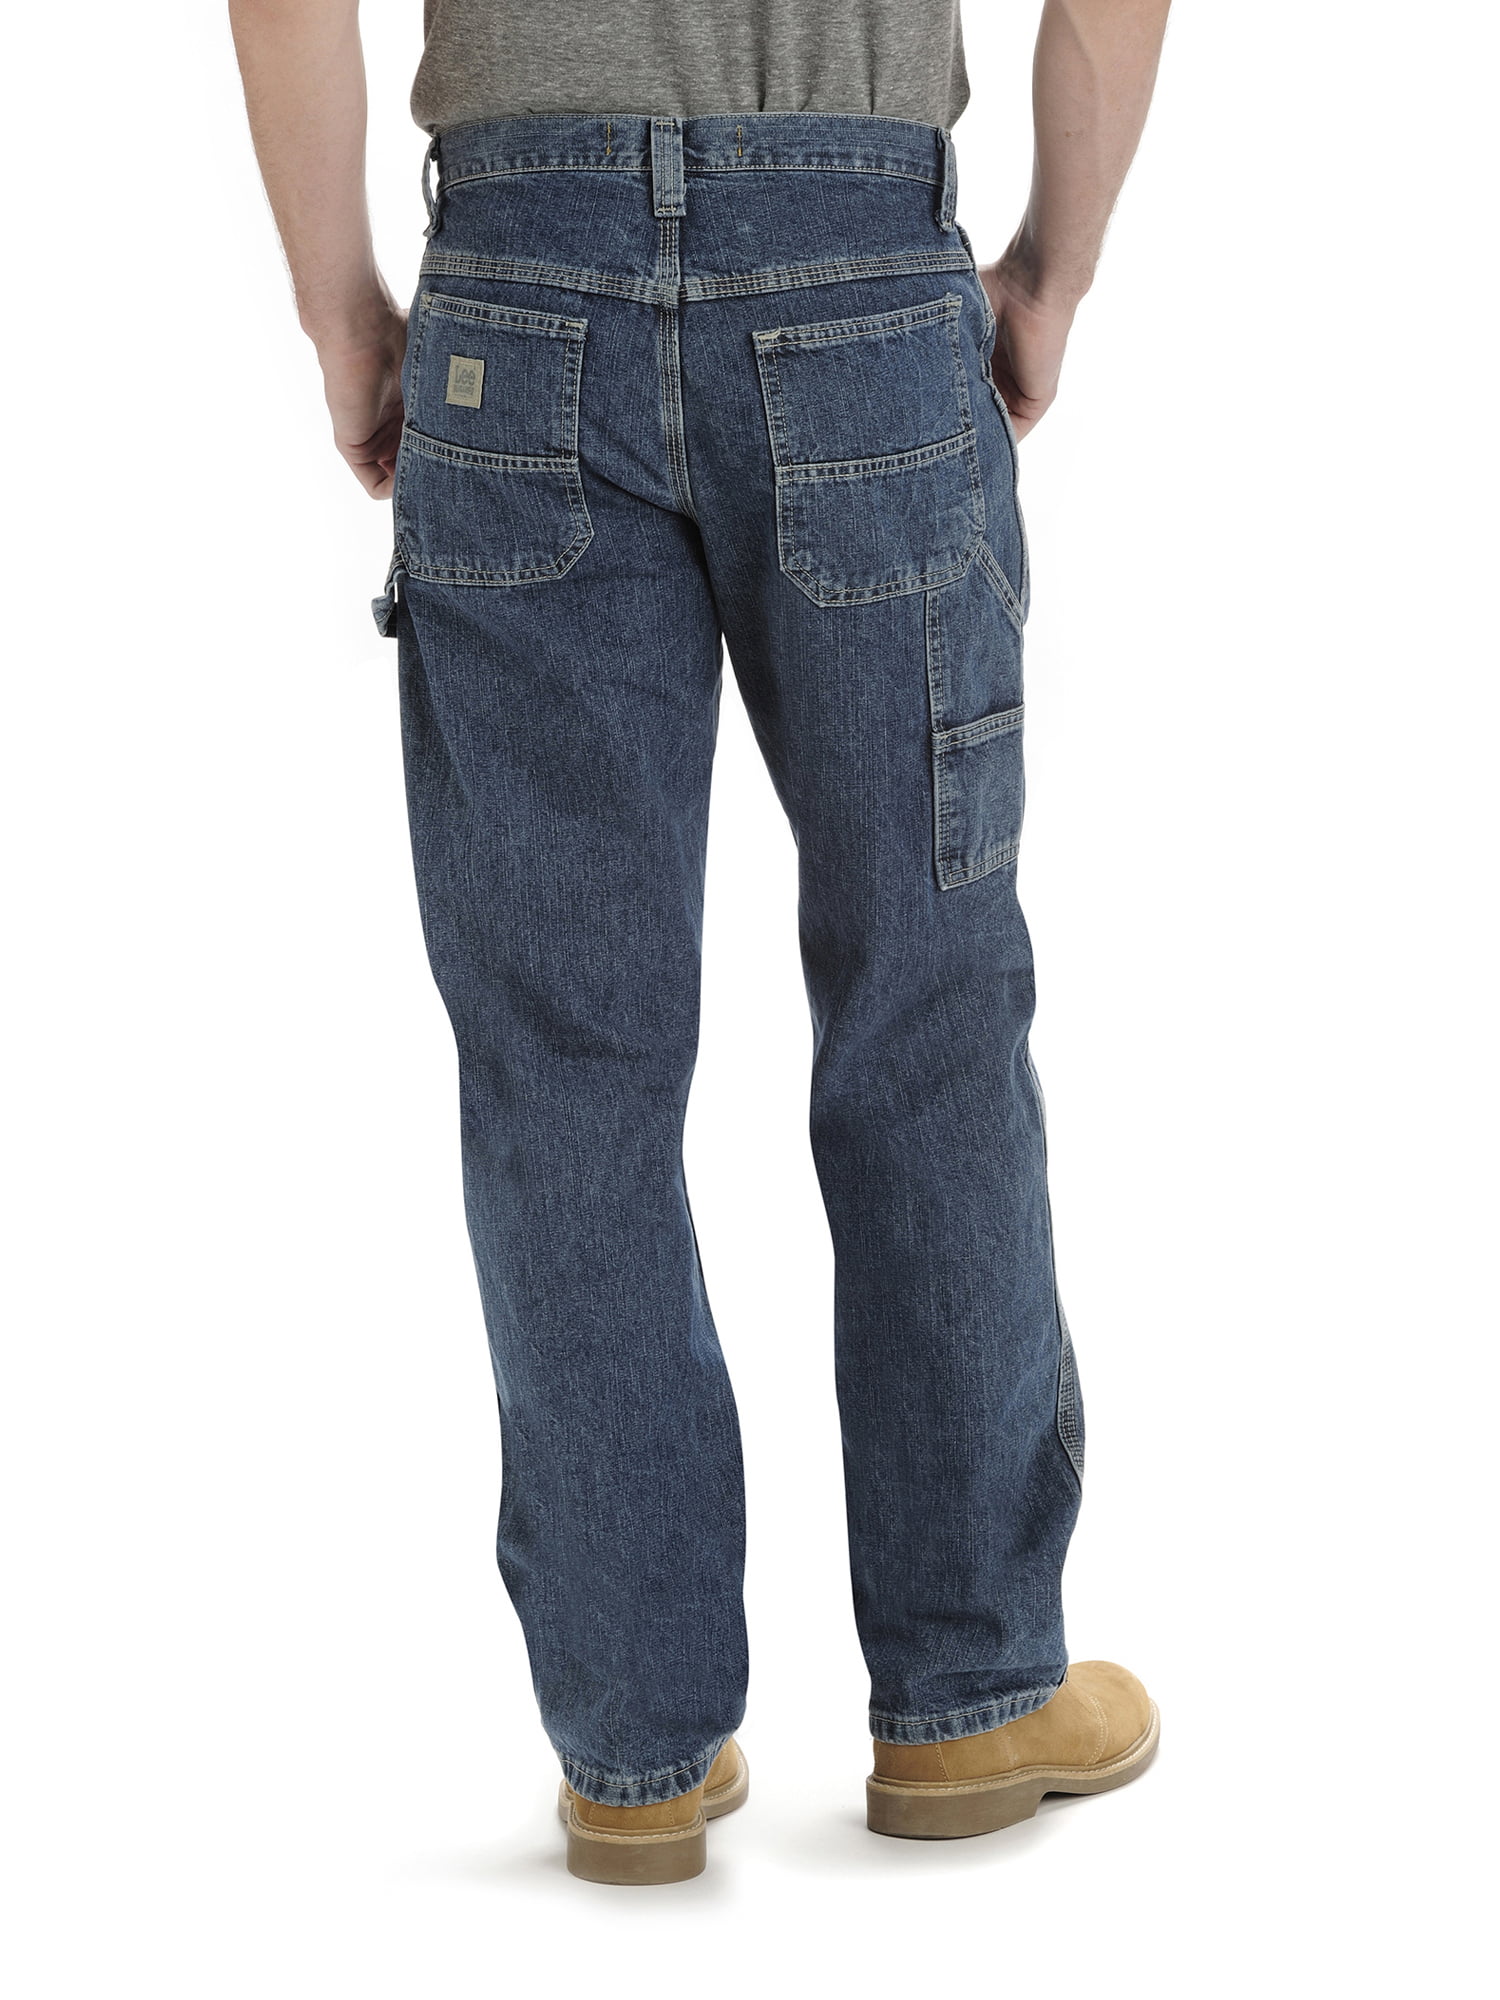 lee carpenter jeans walmart